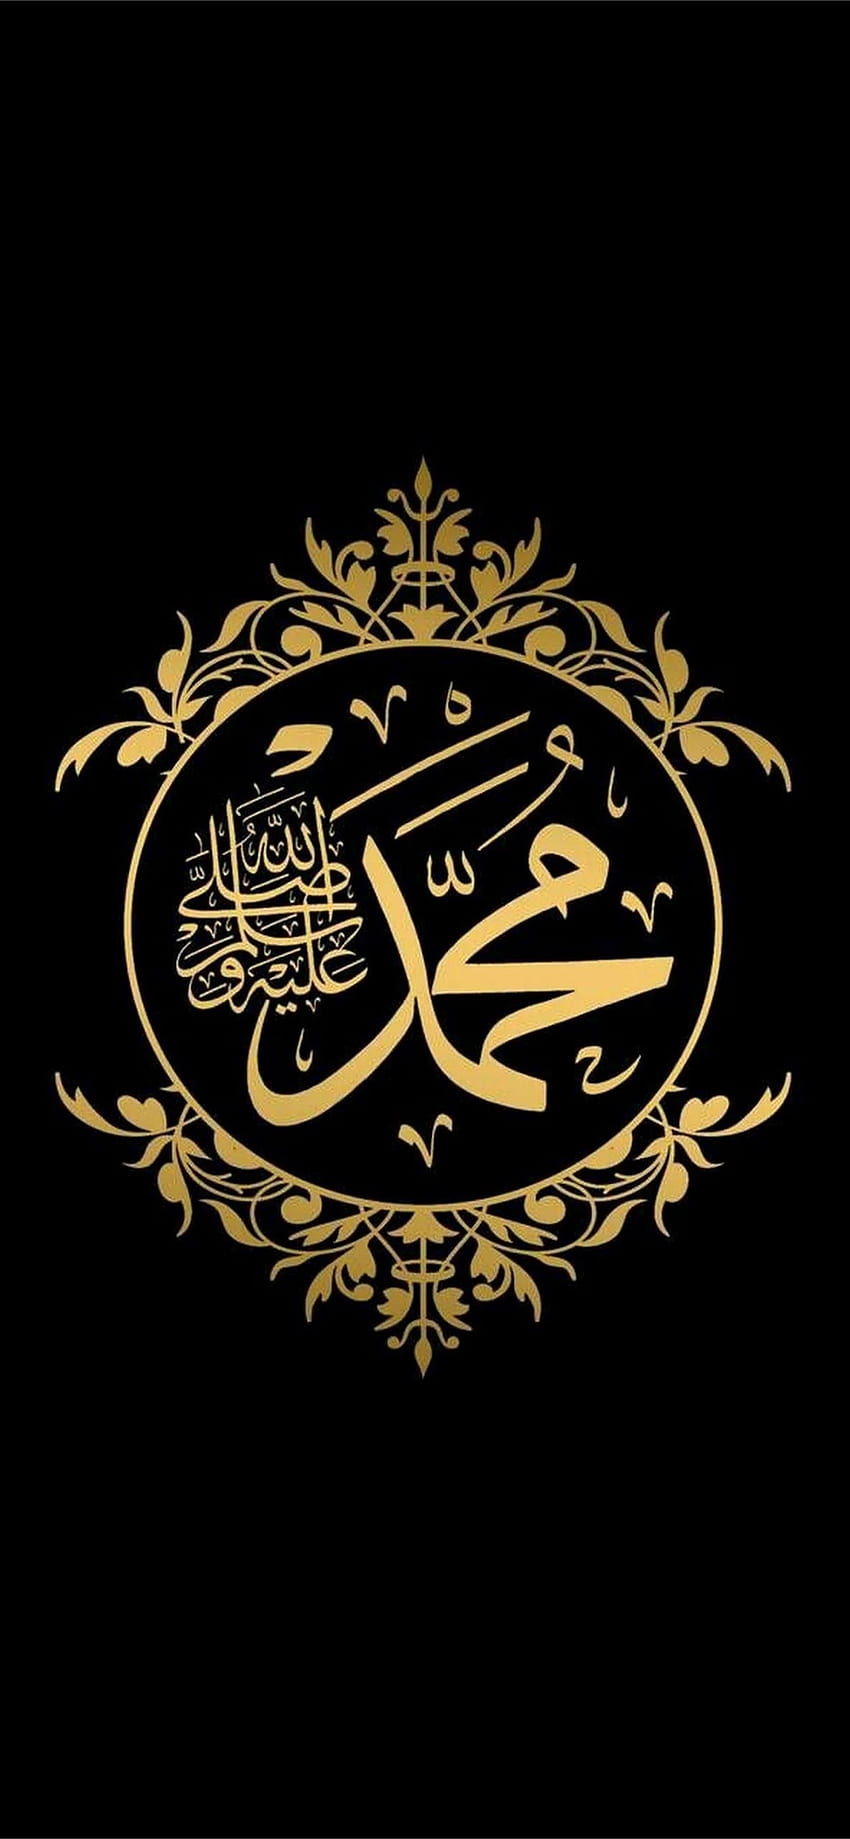 Allah Live Wallpaper 2019 APK 1.0.2 - Download APK latest version